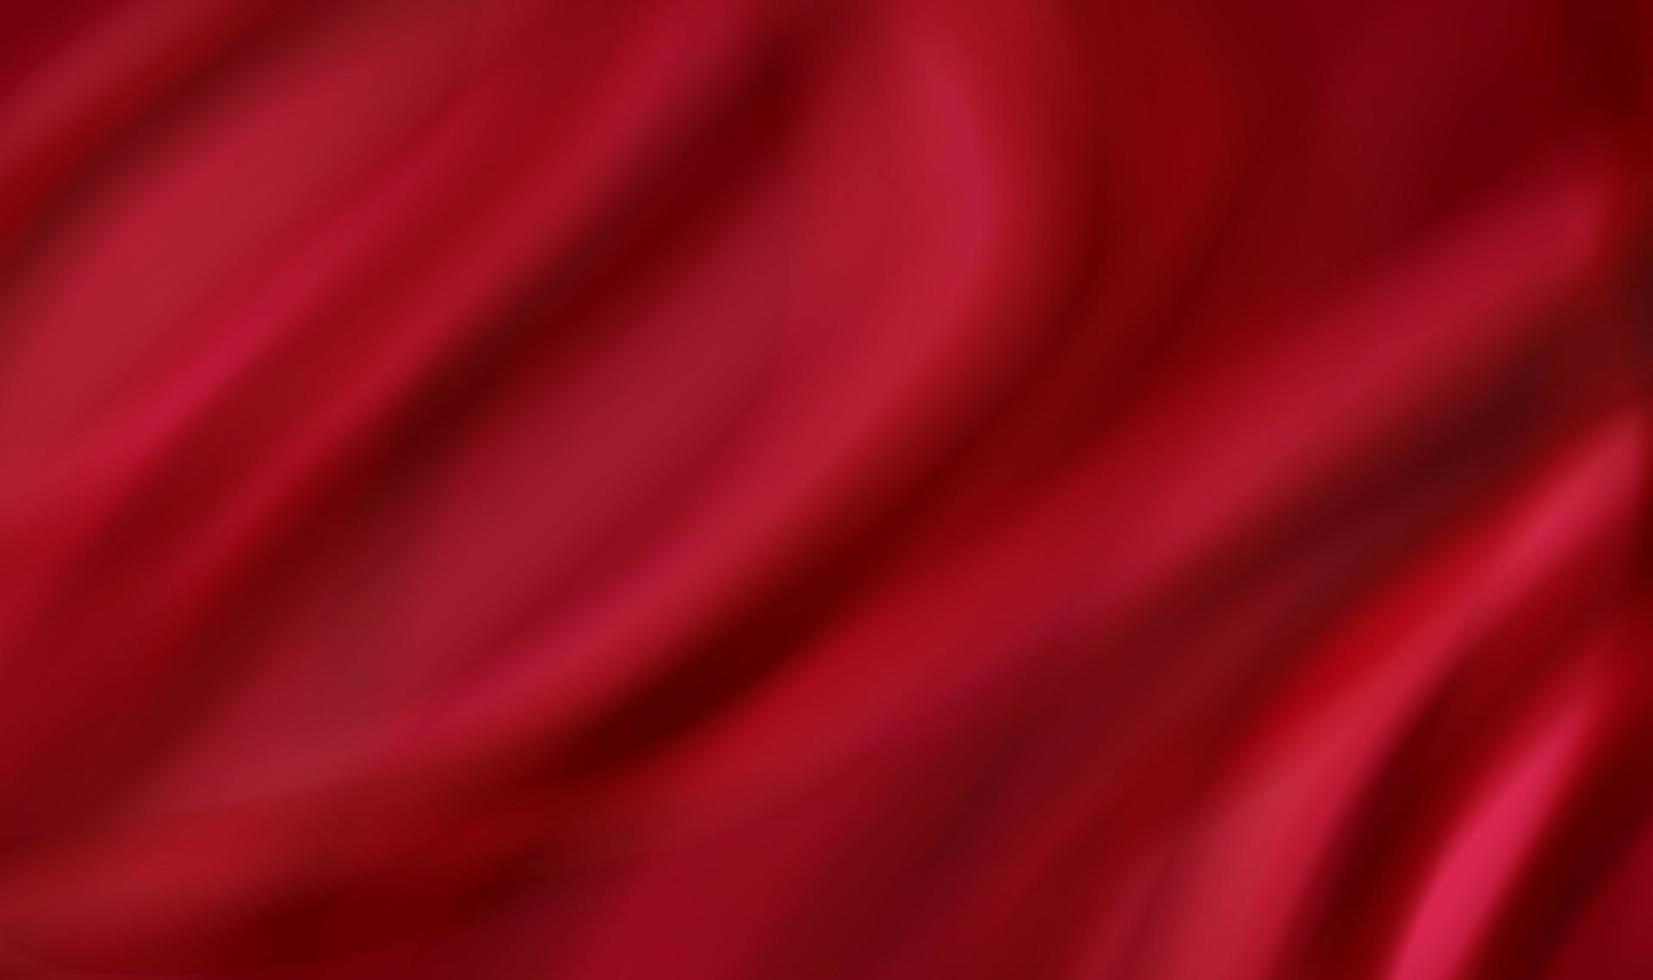 abstrakt rött sidentyg realistisk textil 3d illustration bakgrund vektor